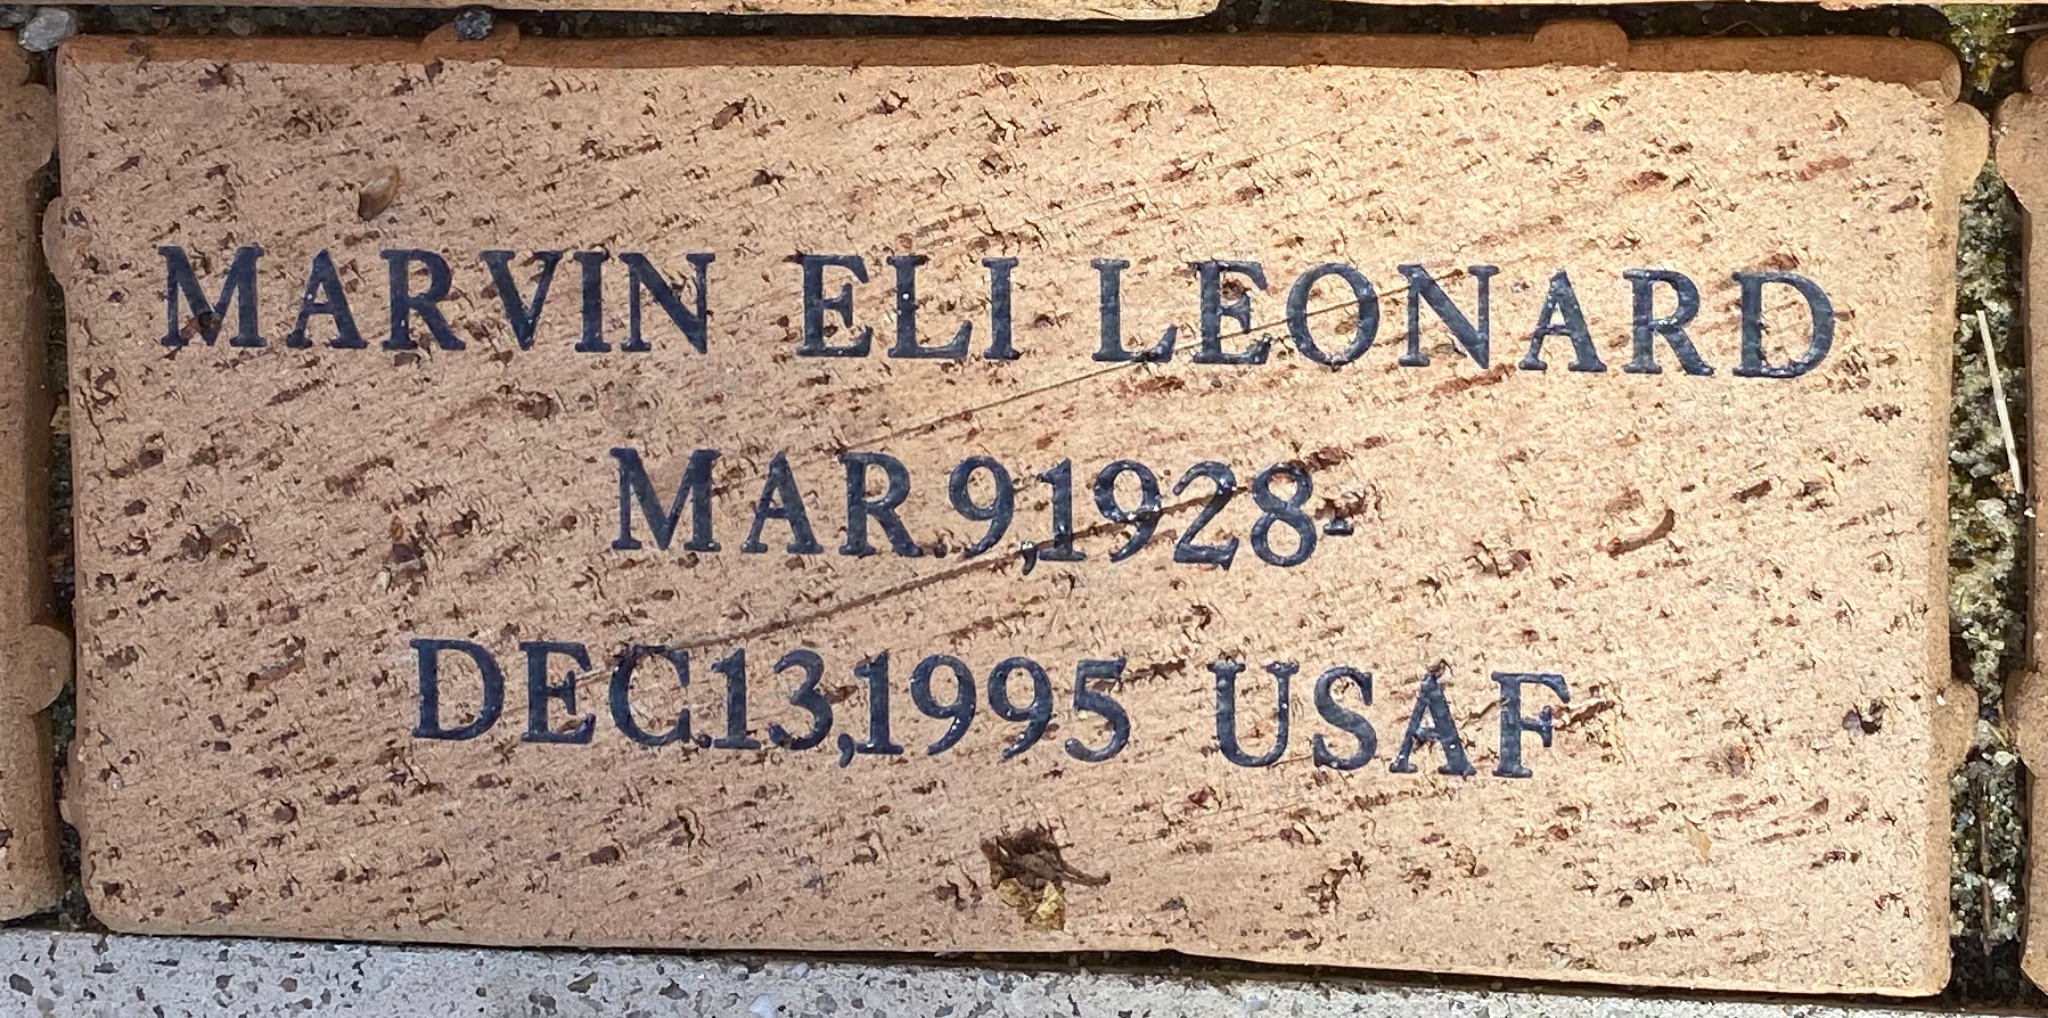 MARVIN ELI LEONARD MAR.9, 1928- DEC.13,1995 USAF